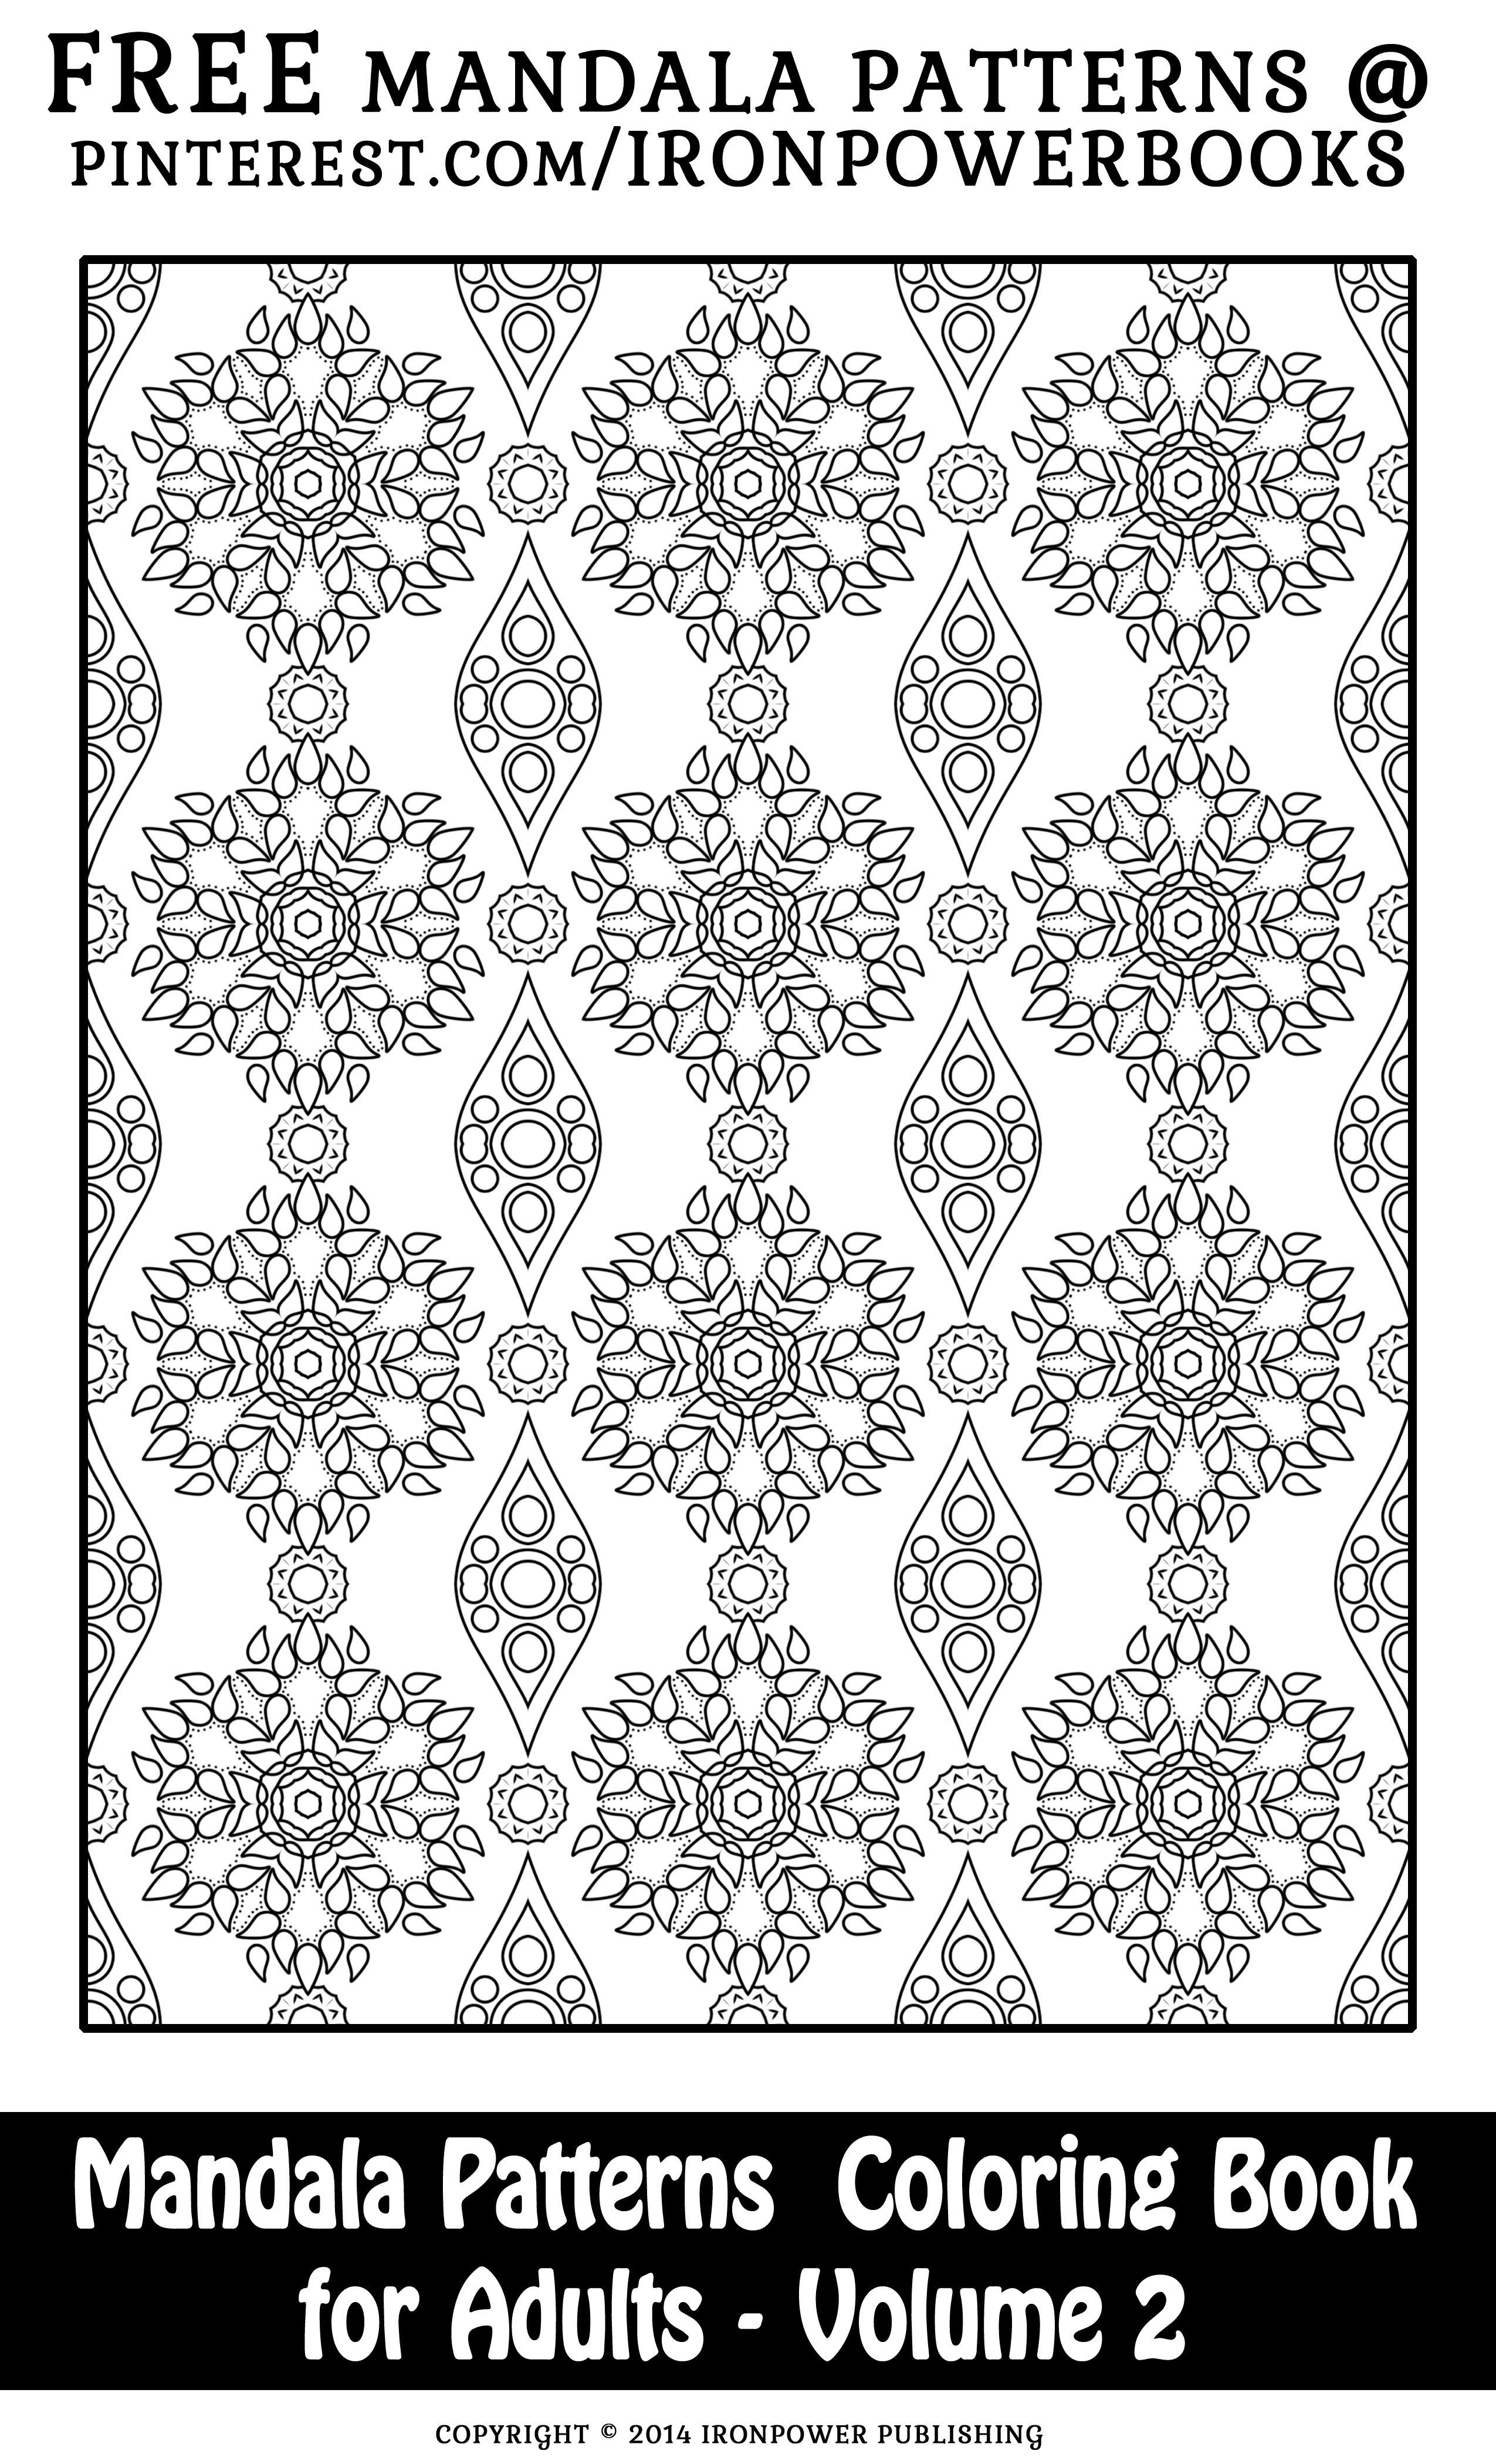 Free Printable Mandala Pattern Coloring Pages | Follow - Free Printable Mandala Patterns